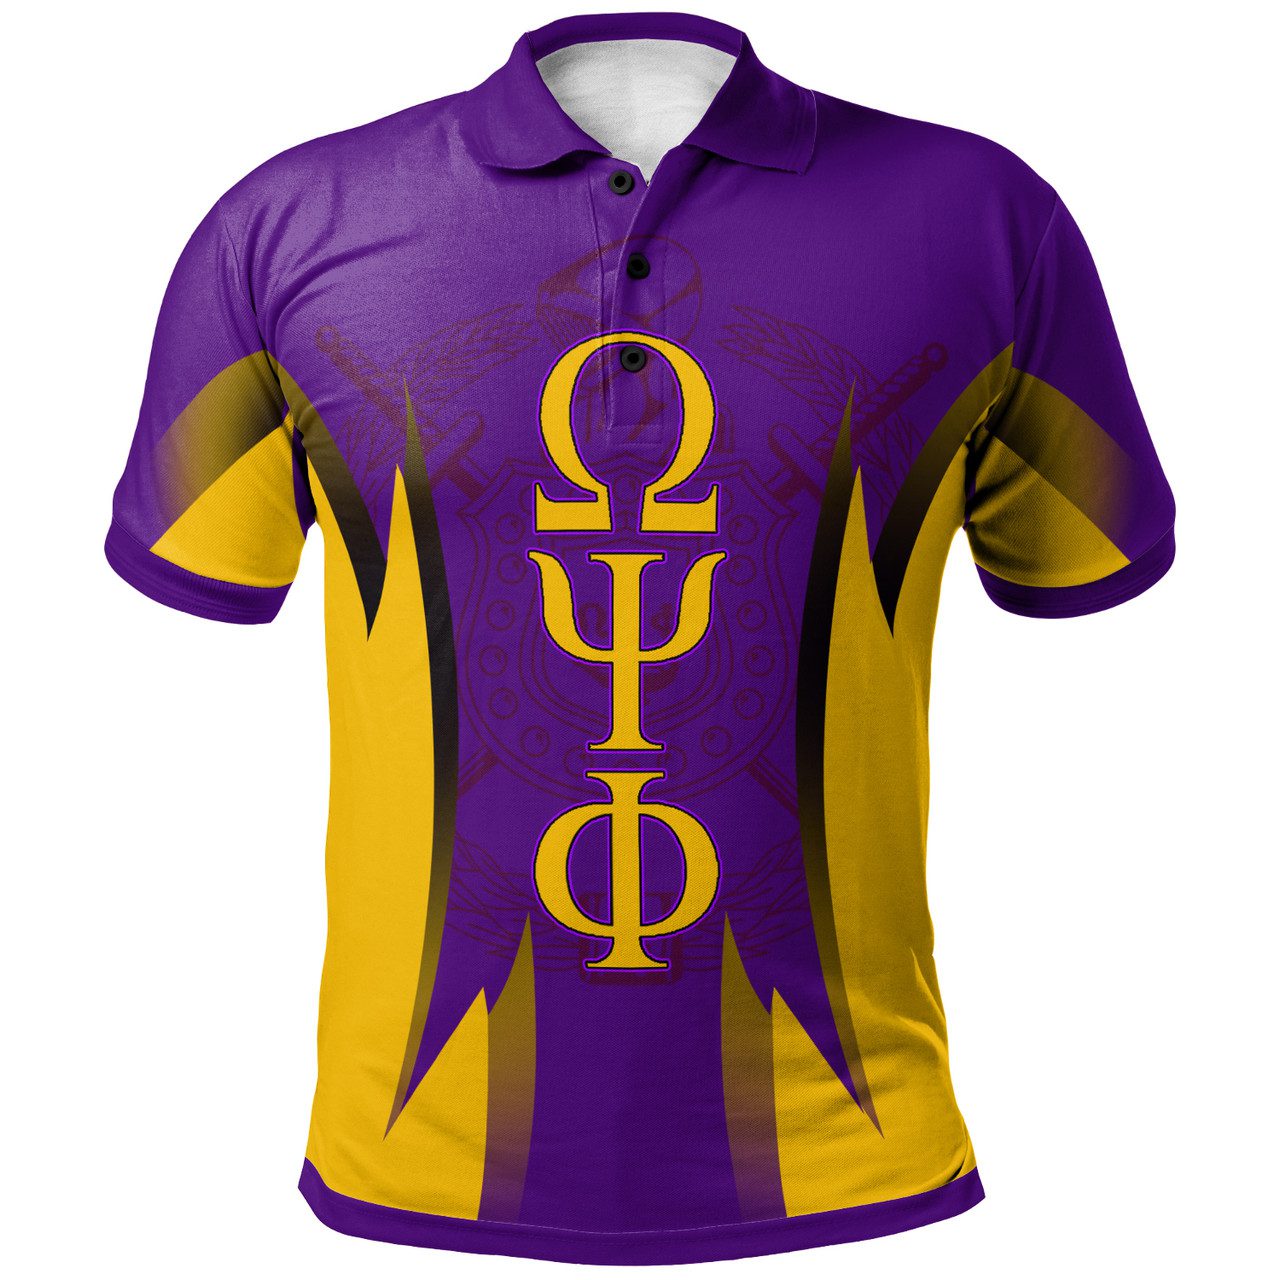 Omega Psi Phi Polo Shirt – Fraternity Limited Version Polo Shirt